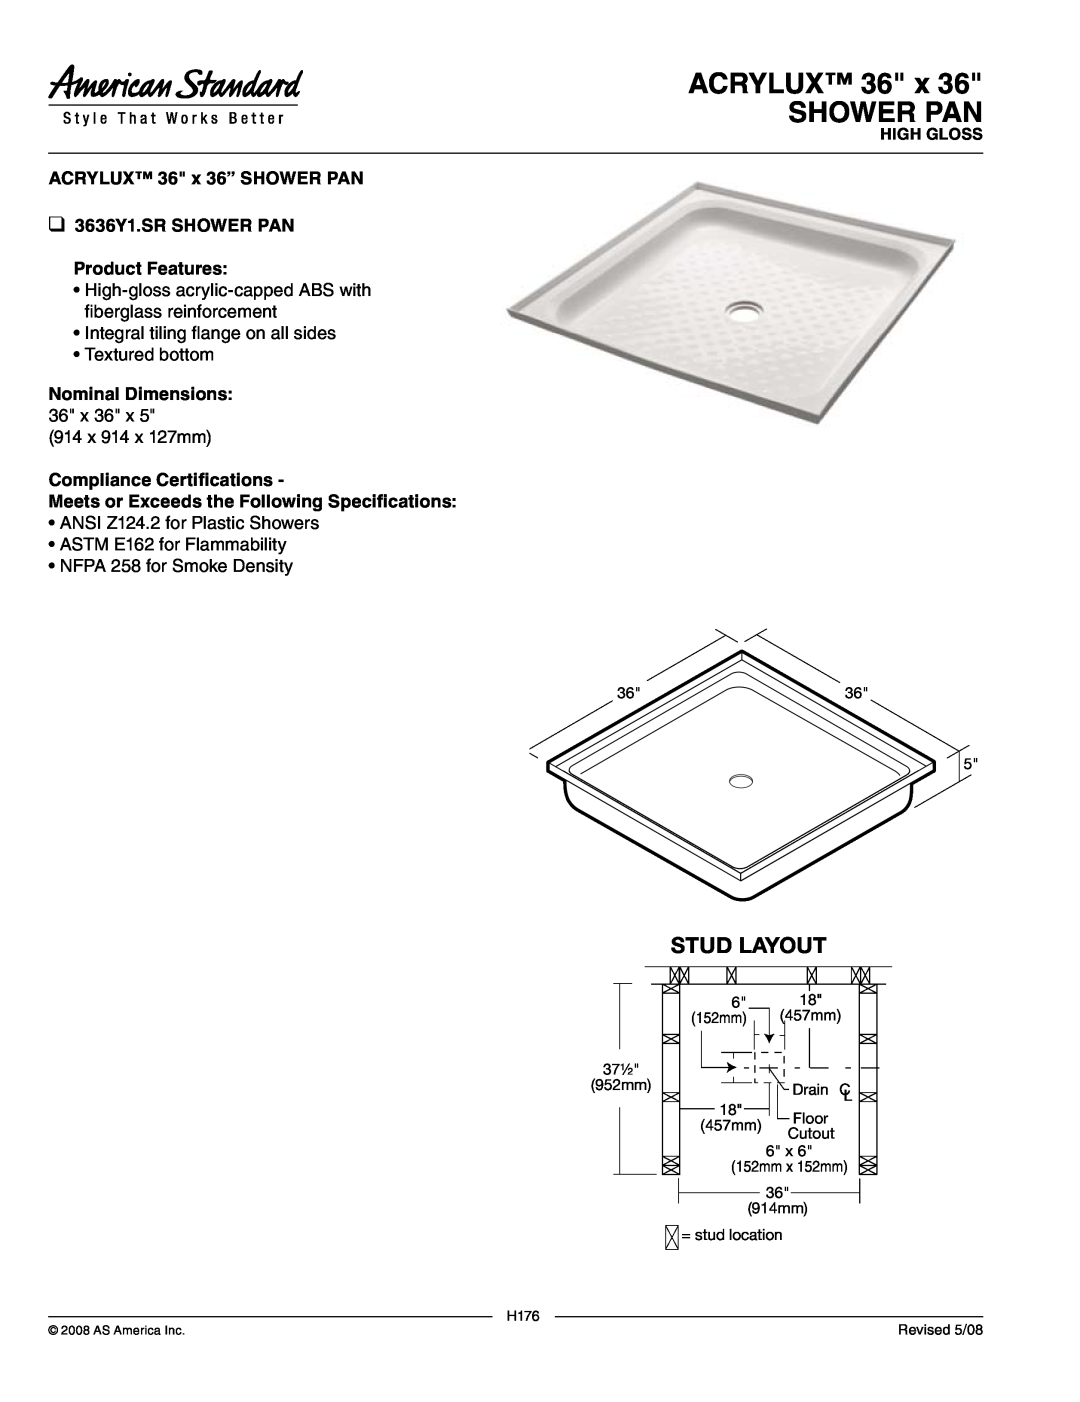 American Standard ANSI Z124.2 manual ACRYLUX 36 x SHOWER Pan, Stud Layout, ACRYLUX 36 x 36” SHOWER Pan, Nominal Dimensions 